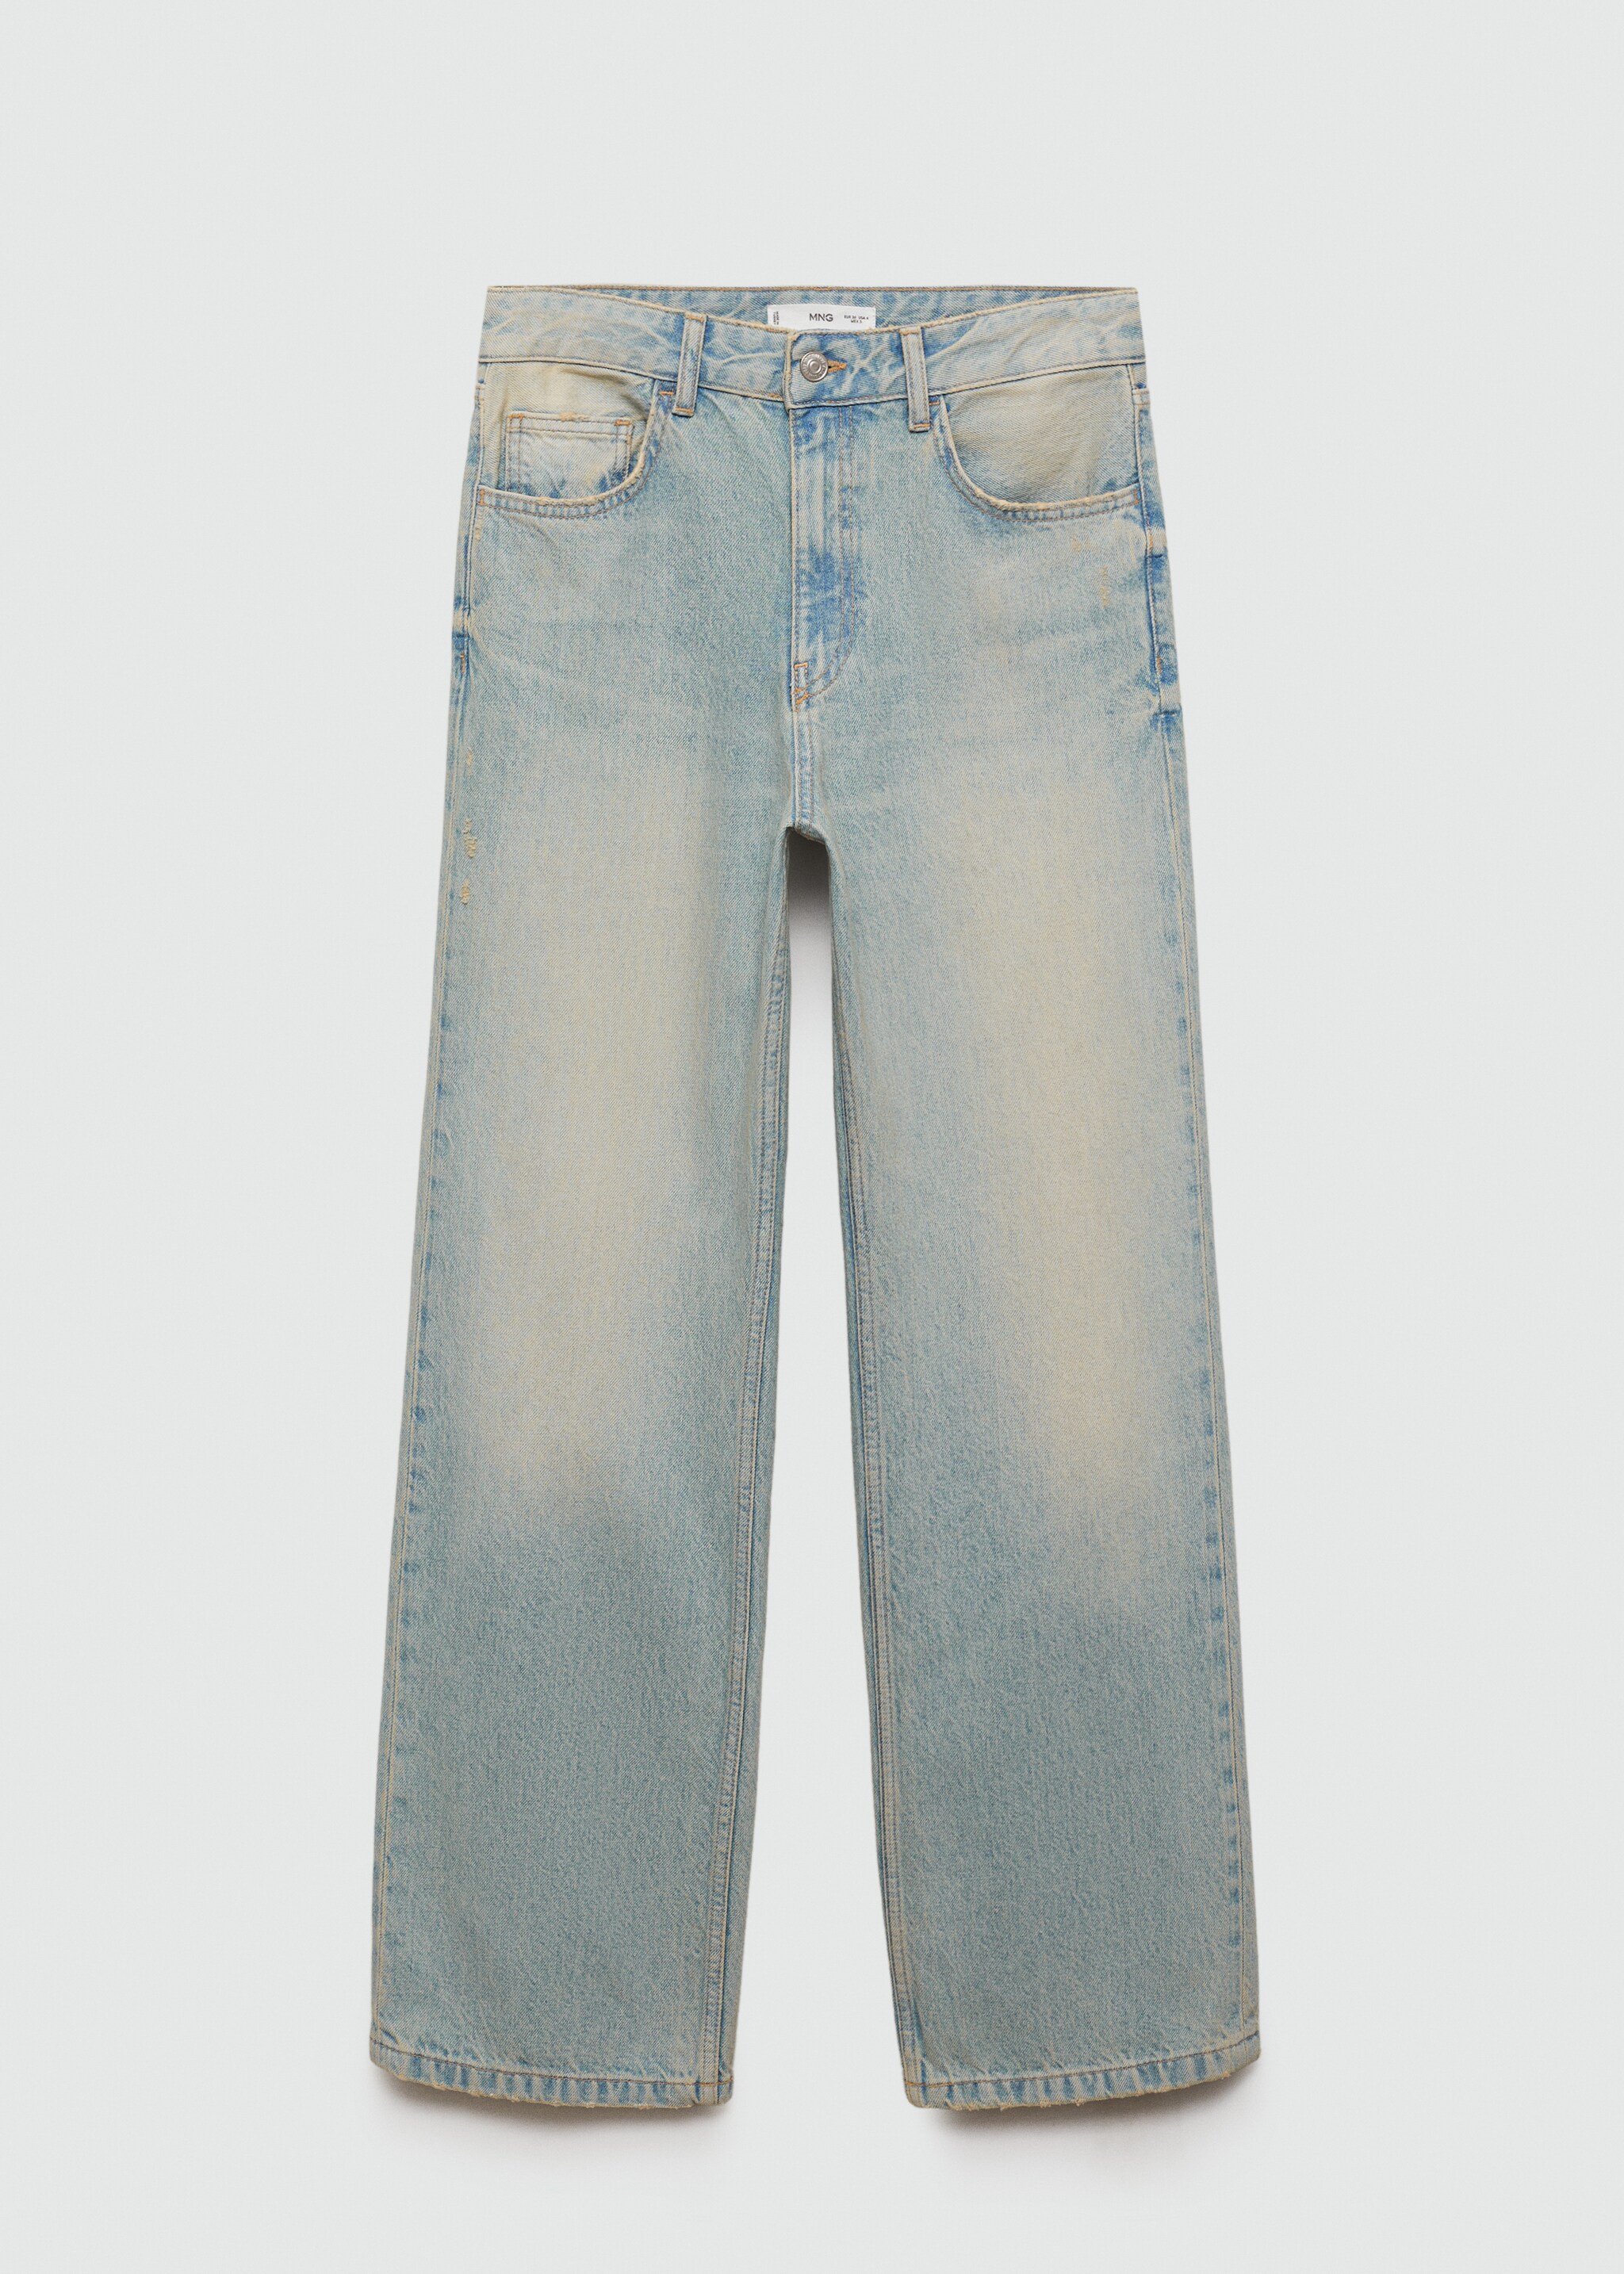 Mira straight jeans medium rise - Изделие без модели